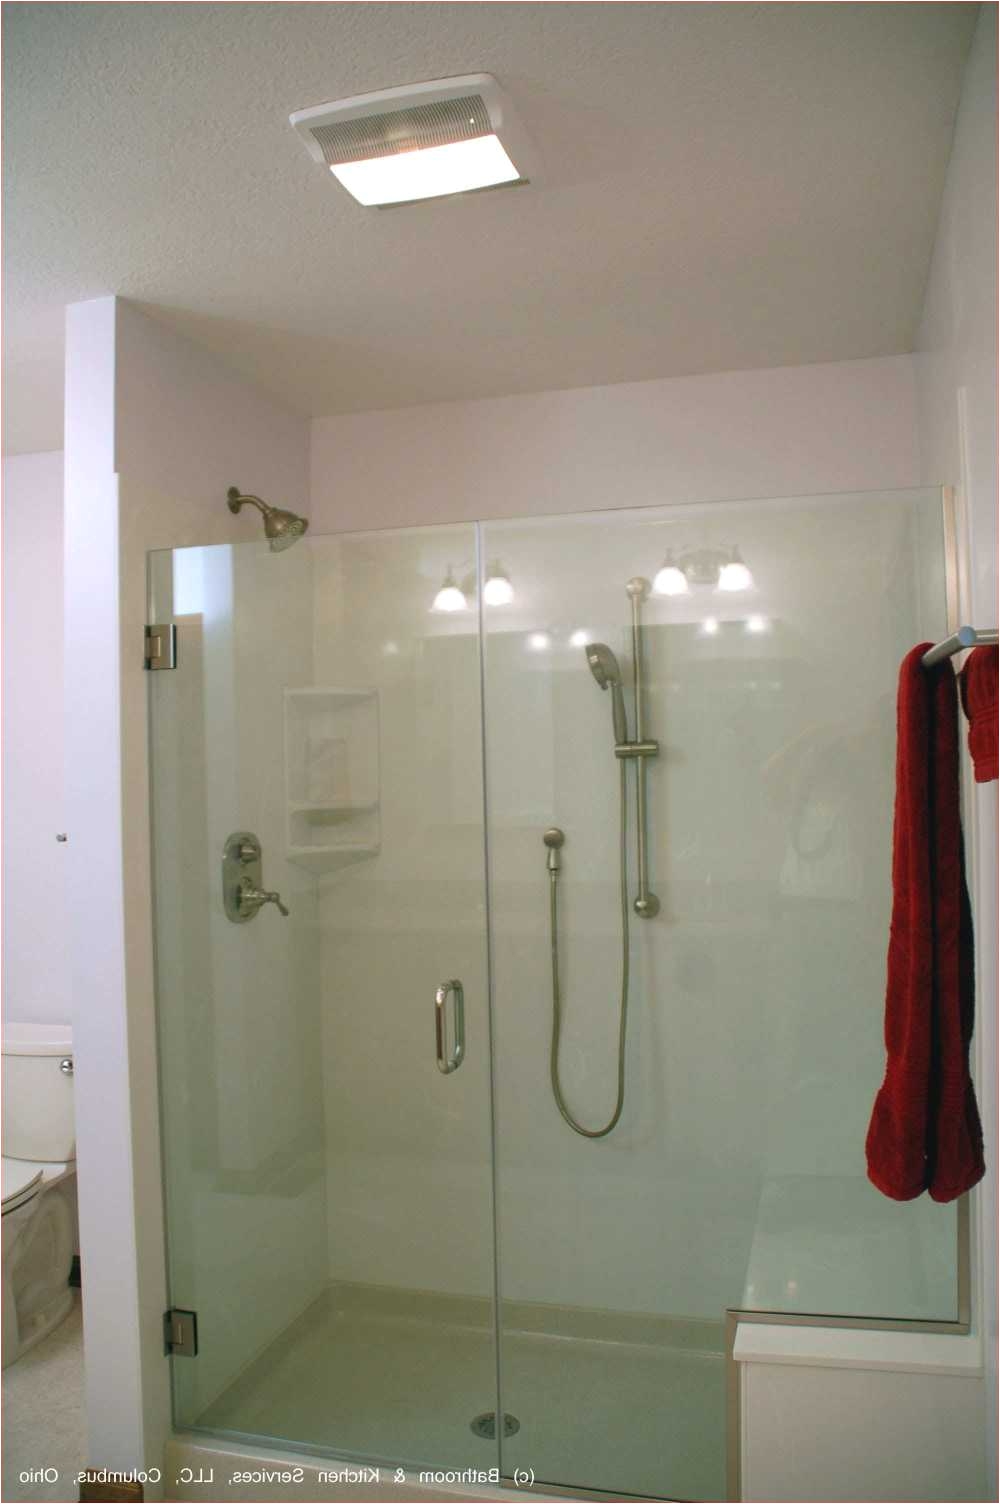 bathroom showers elegant bathroom shower light new h sink install bathroom i 0d exciting diy of